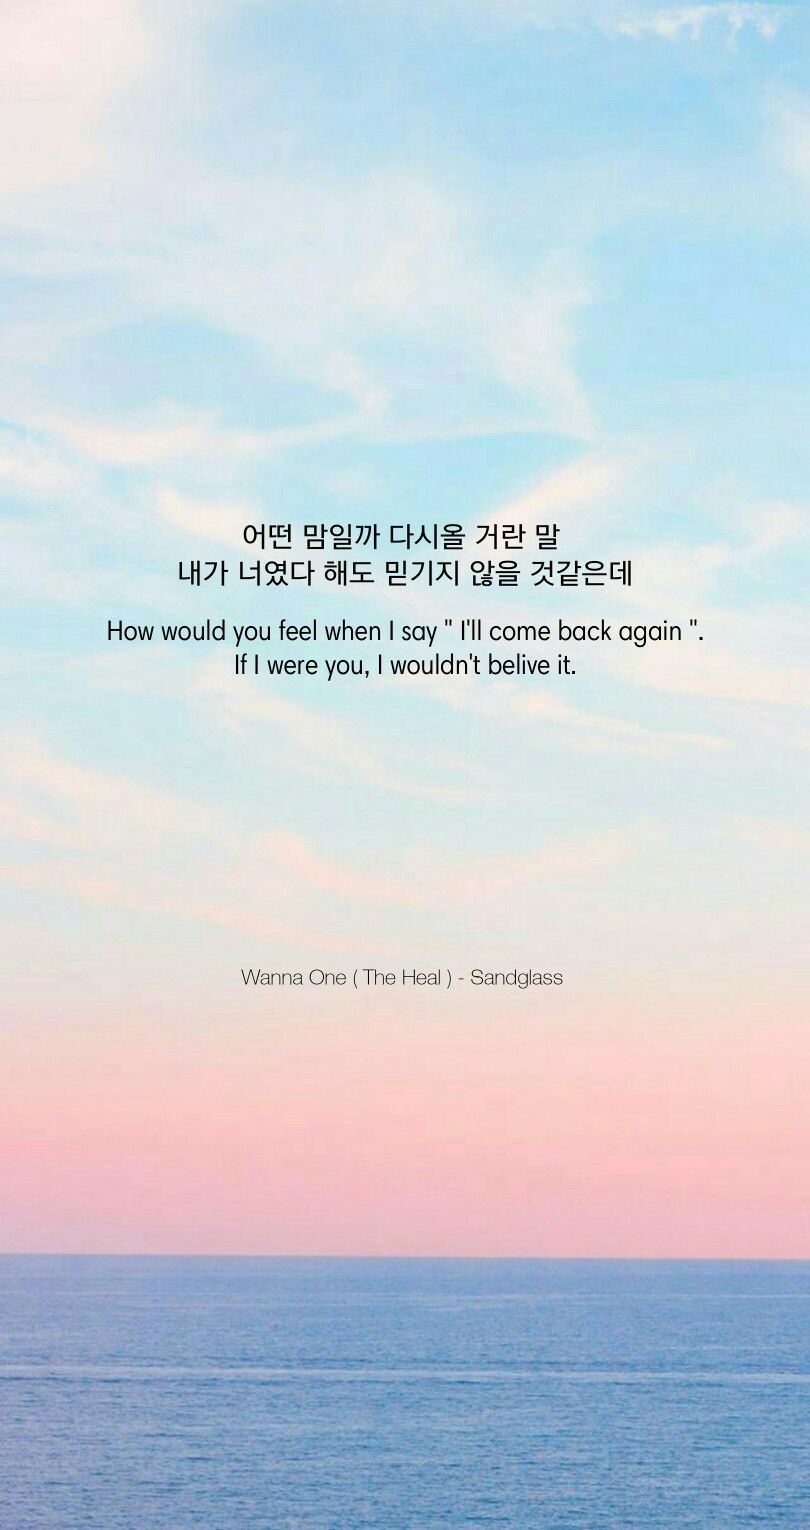 Wanna One ( The Heal ). Kata Kata Indah, Kutipan Lirik, Kutipan Lagu